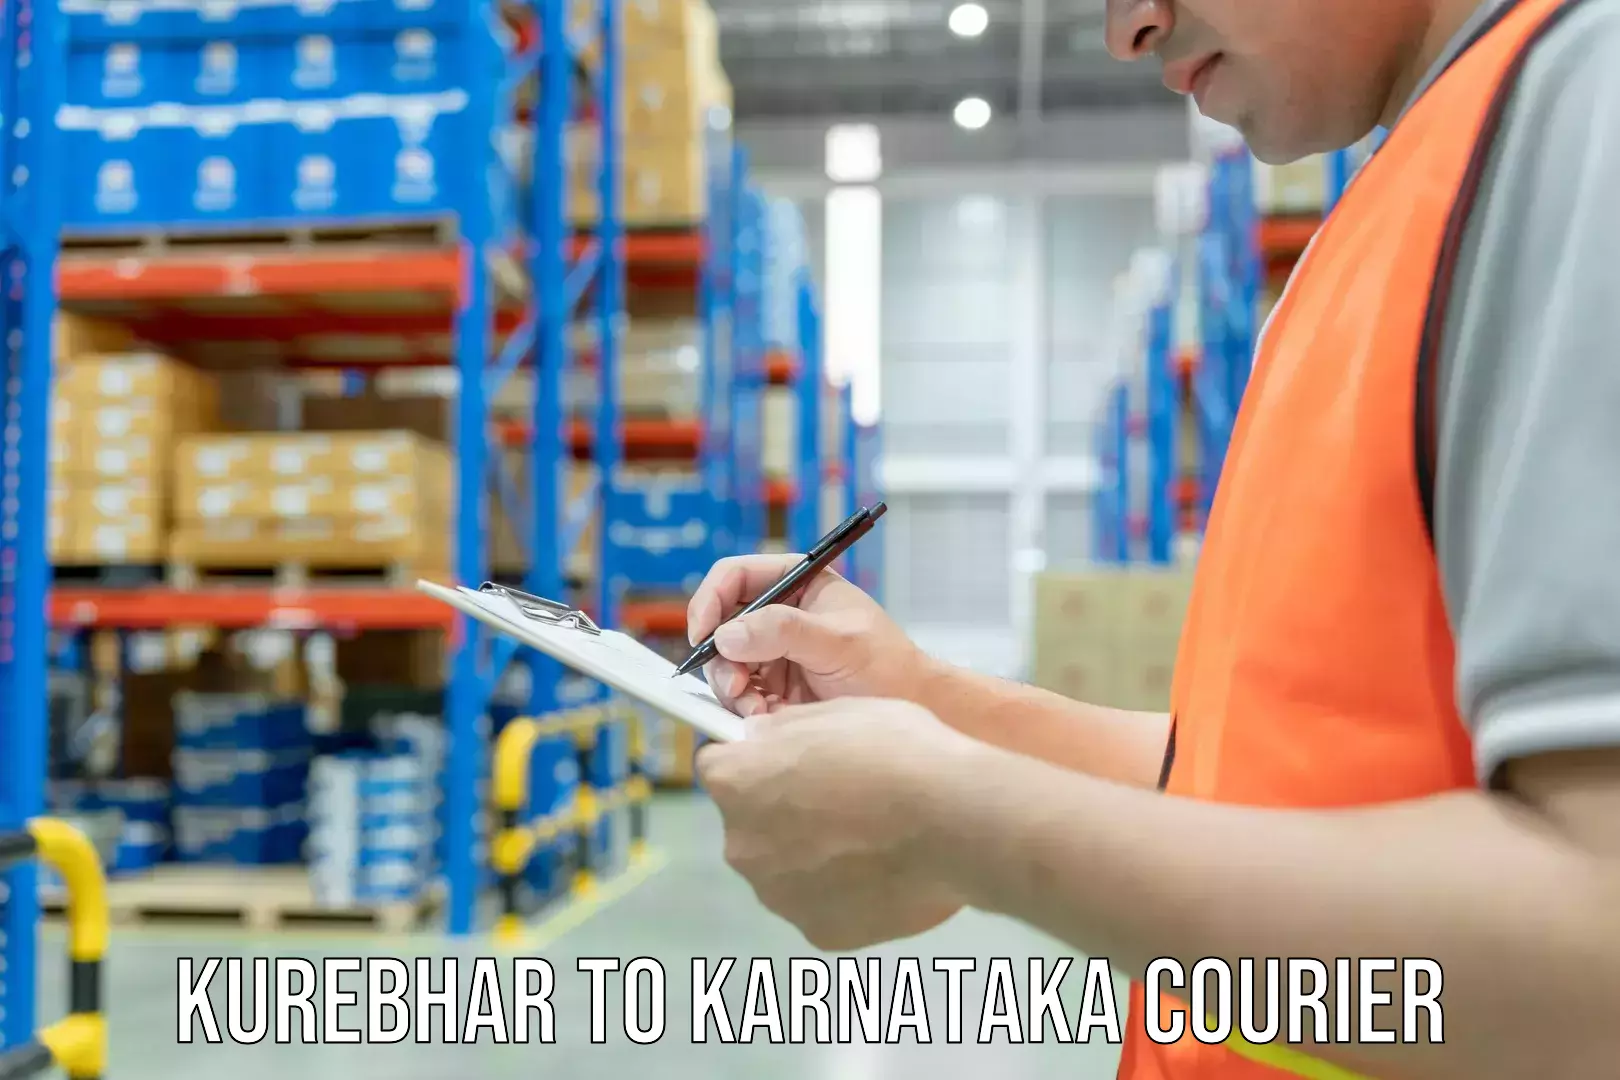 Professional movers in Kurebhar to Karnataka